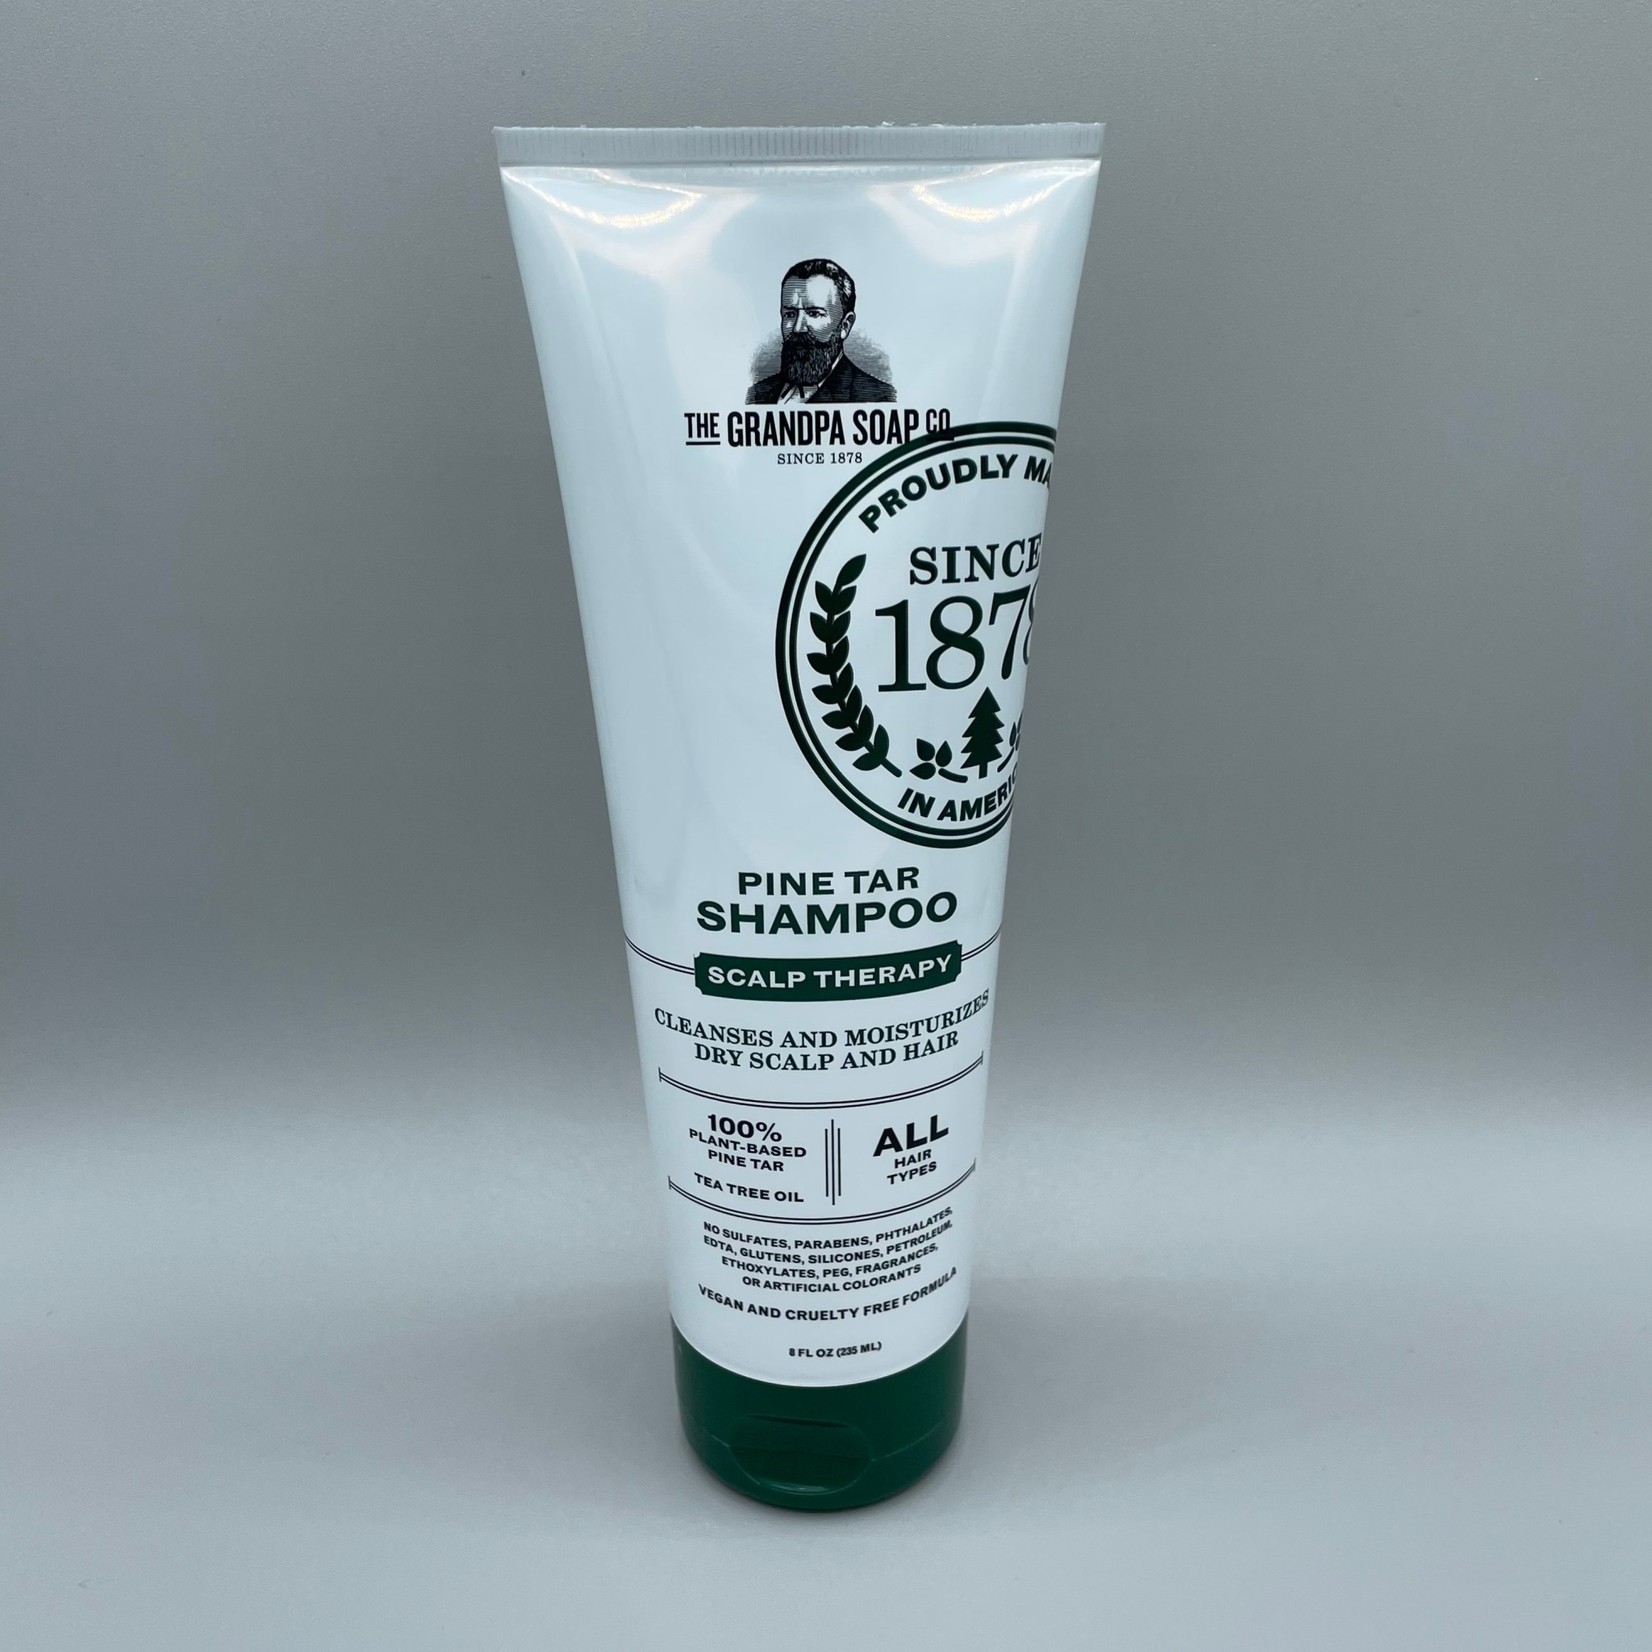 Grandpa Soap Co. Shampoo - Pine Tar